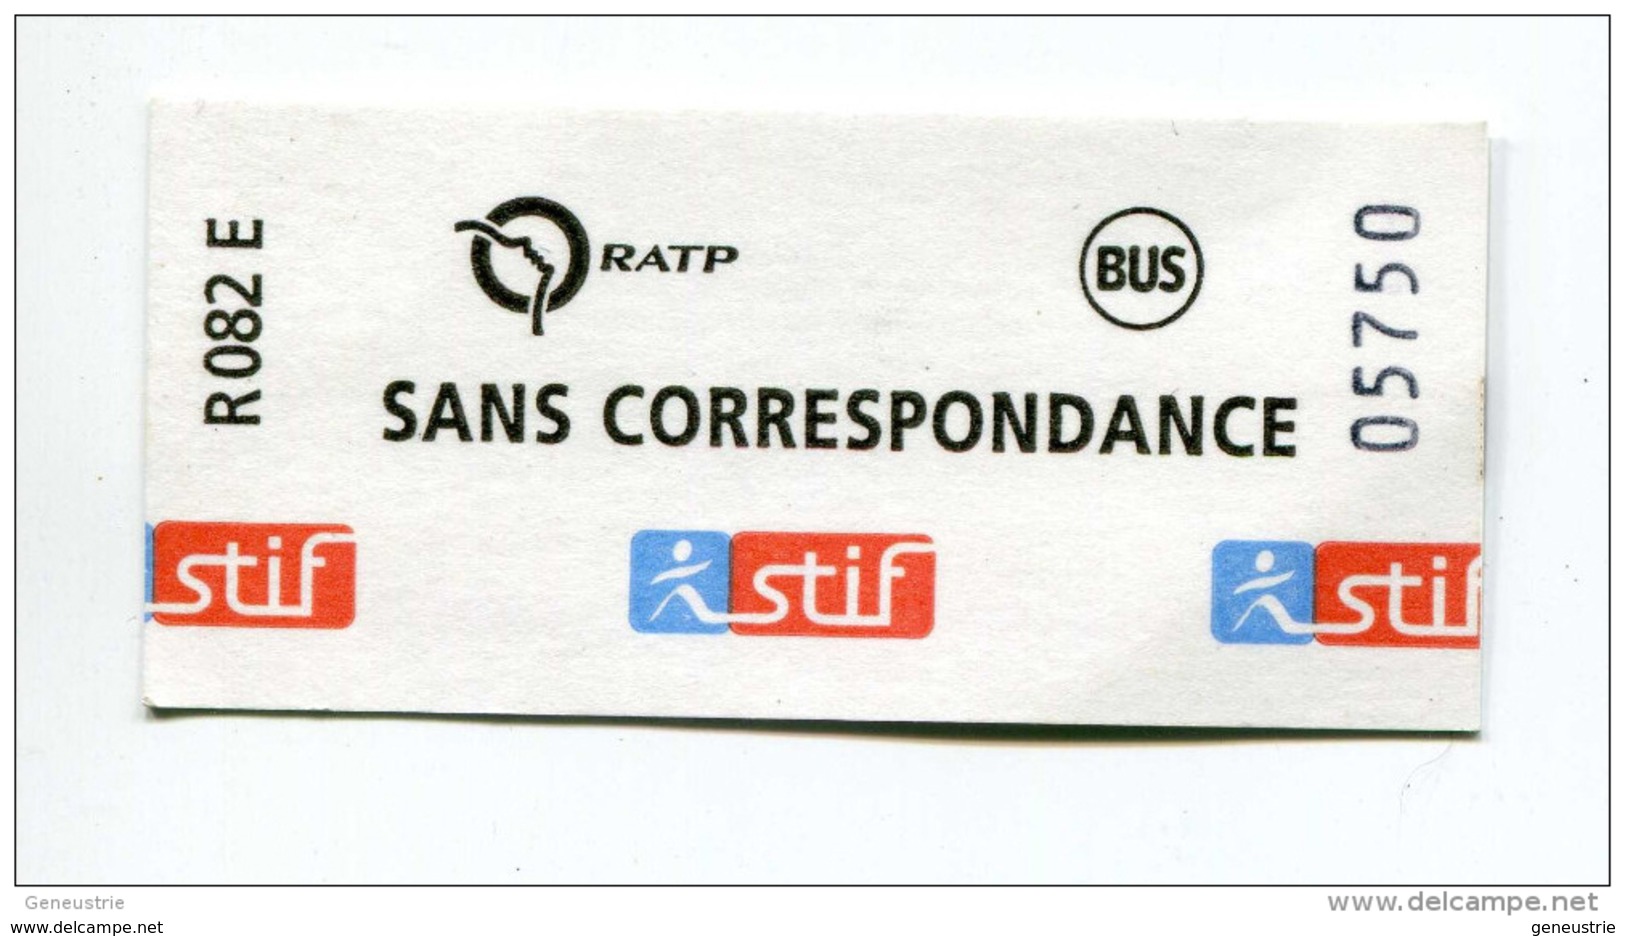 Ticket De Metro, Bus - Paris "Sans Correspondance" 2011 - RATP - Europe